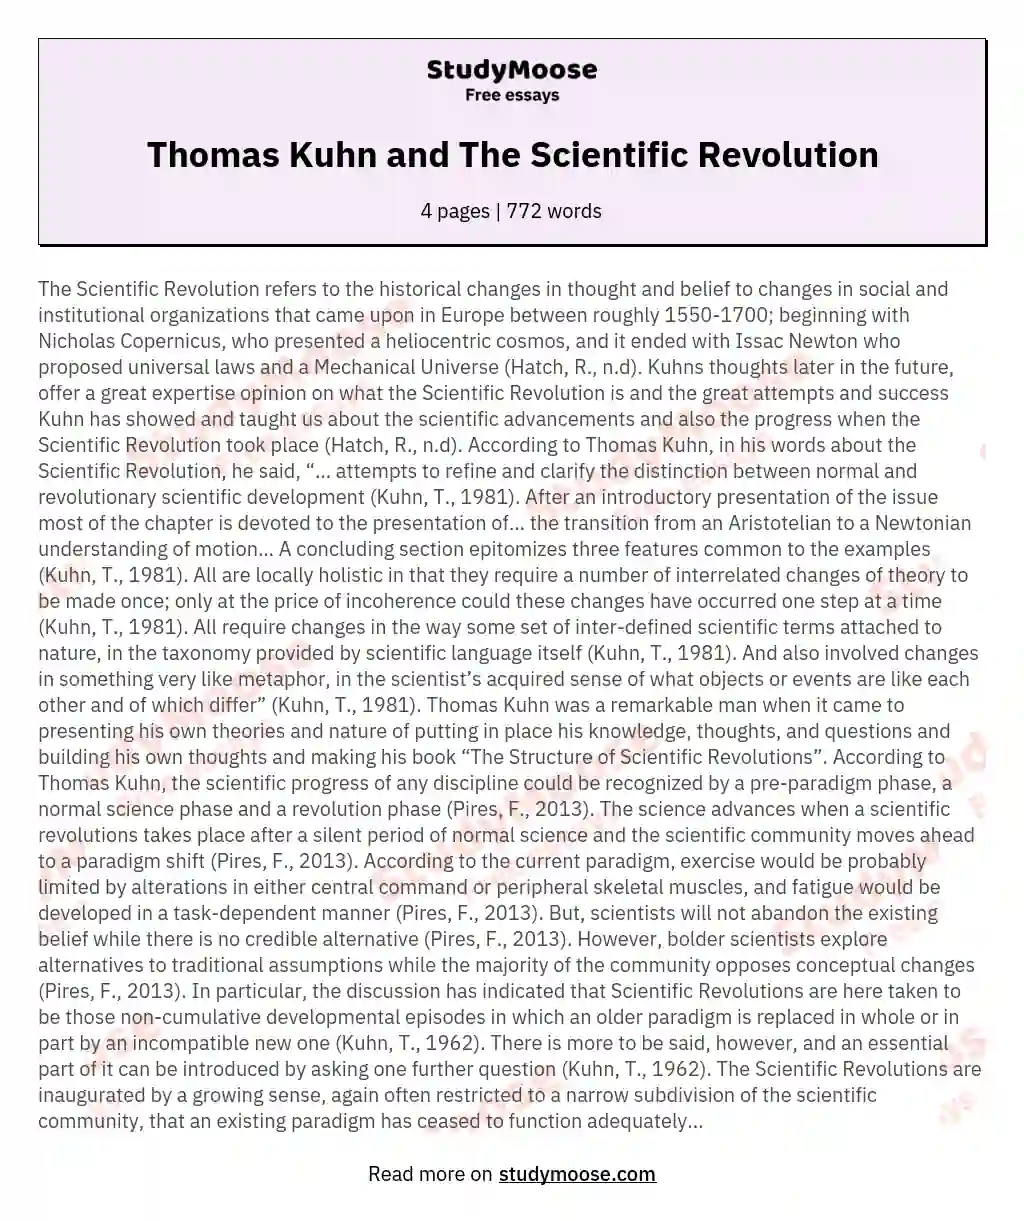 Thomas Kuhn and The Scientific Revolution essay